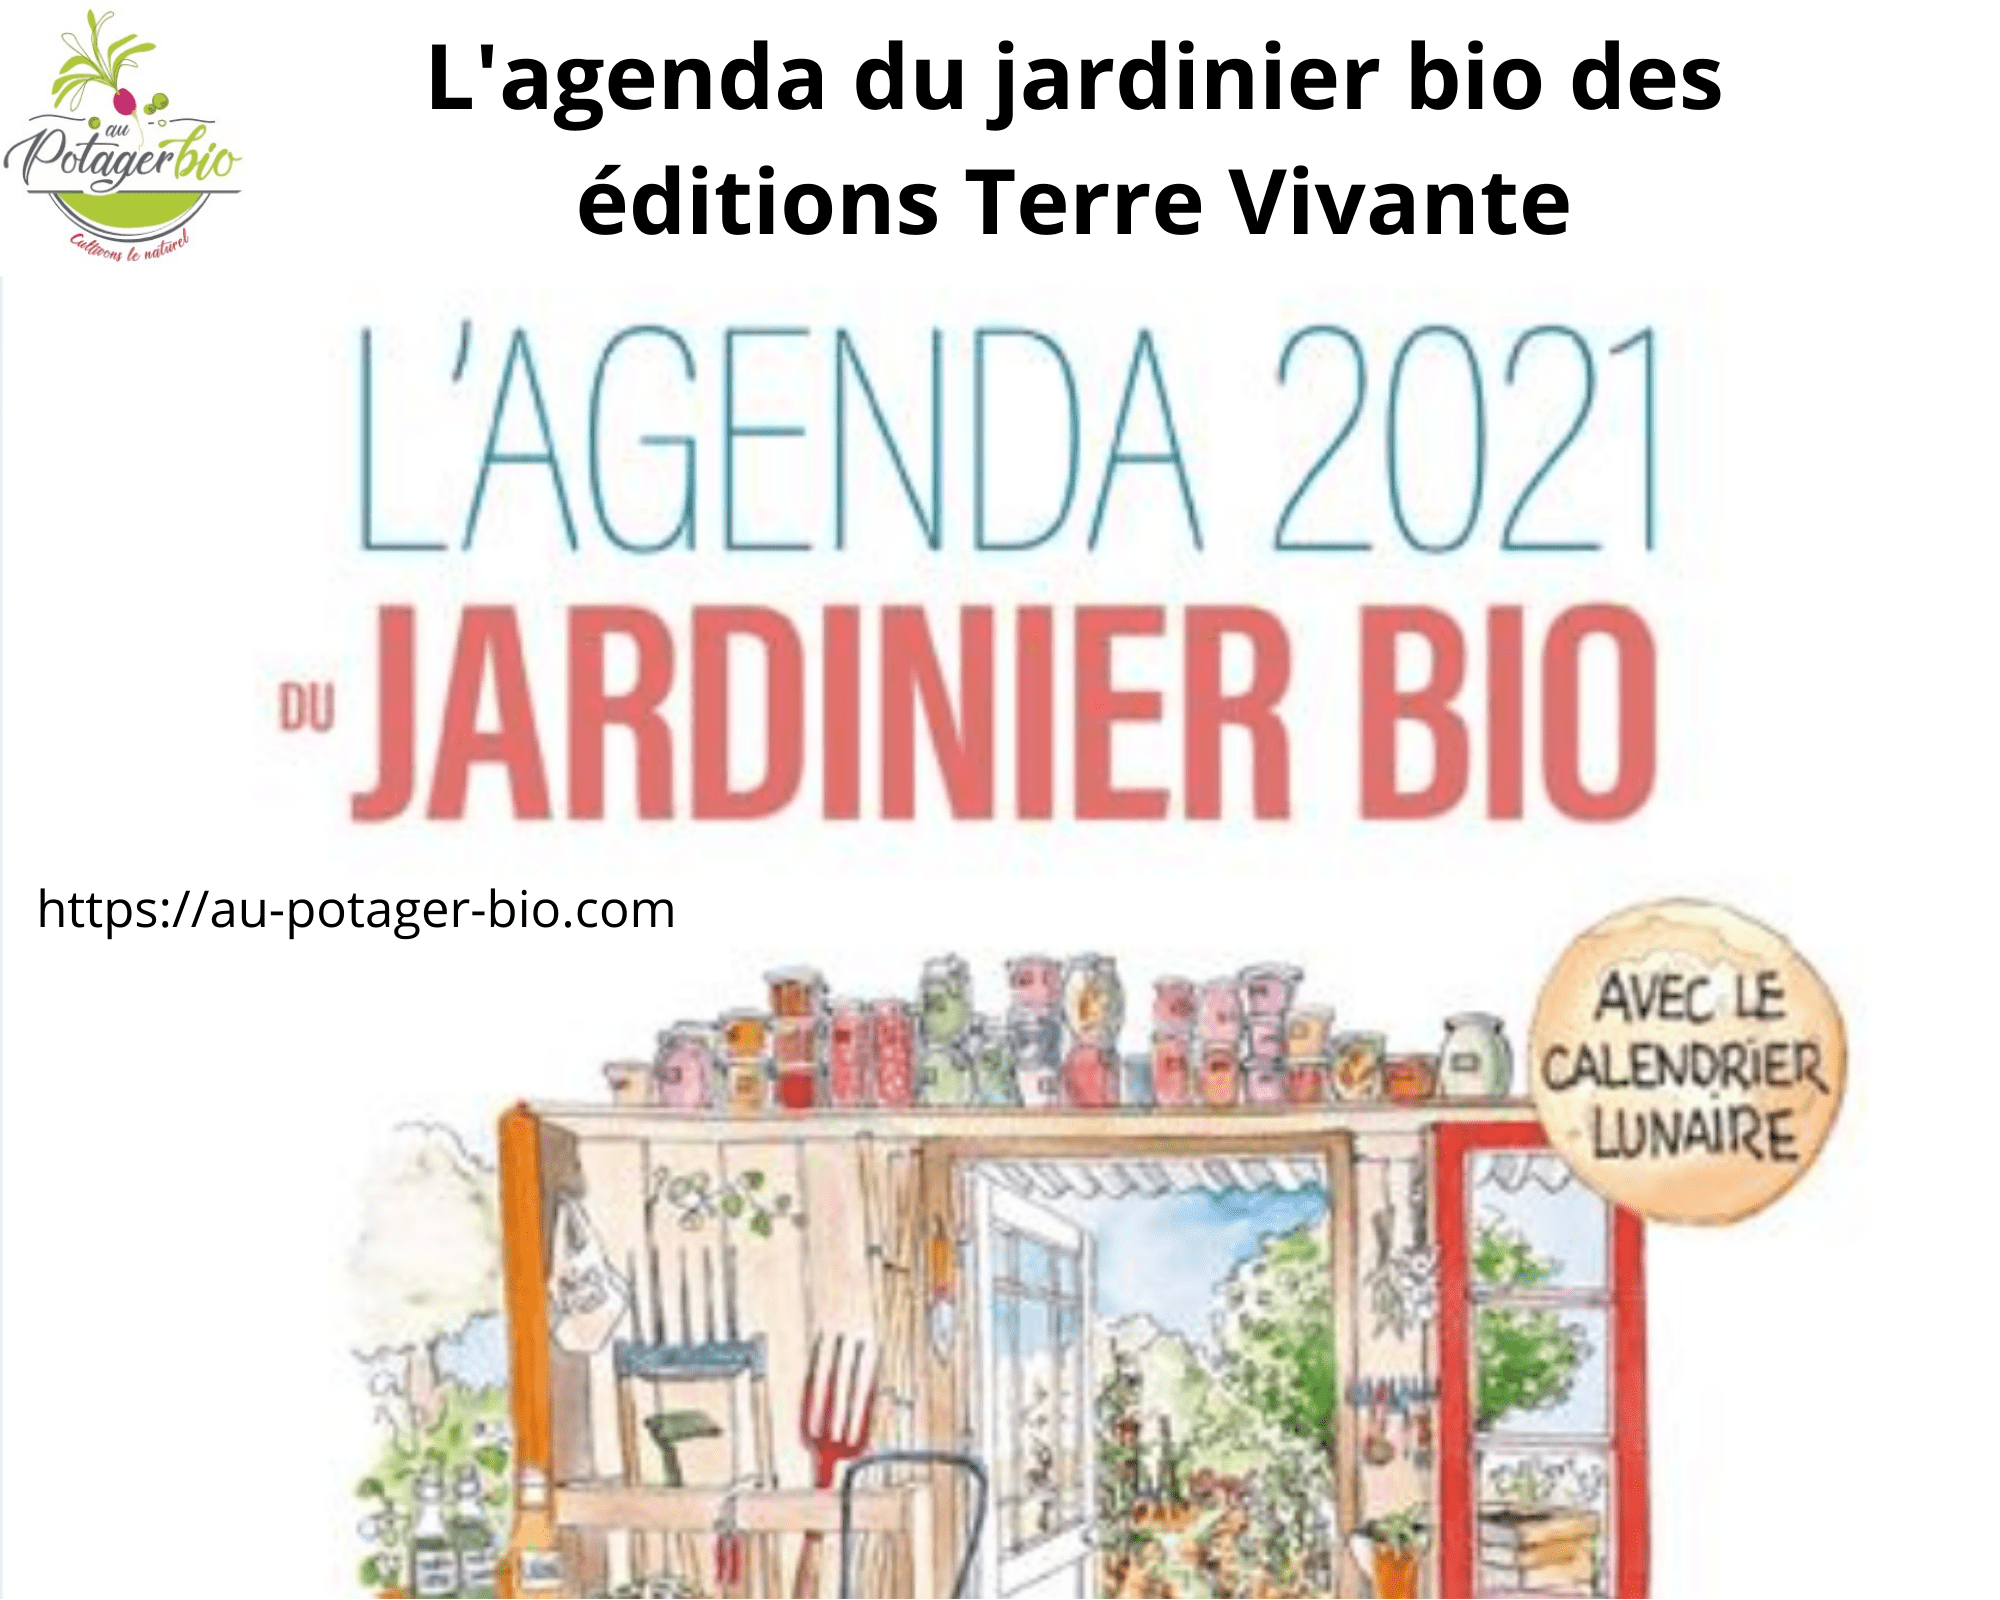 Agenda du jardinier bio 2021 : Editions Terre Vivante - Au potager bio